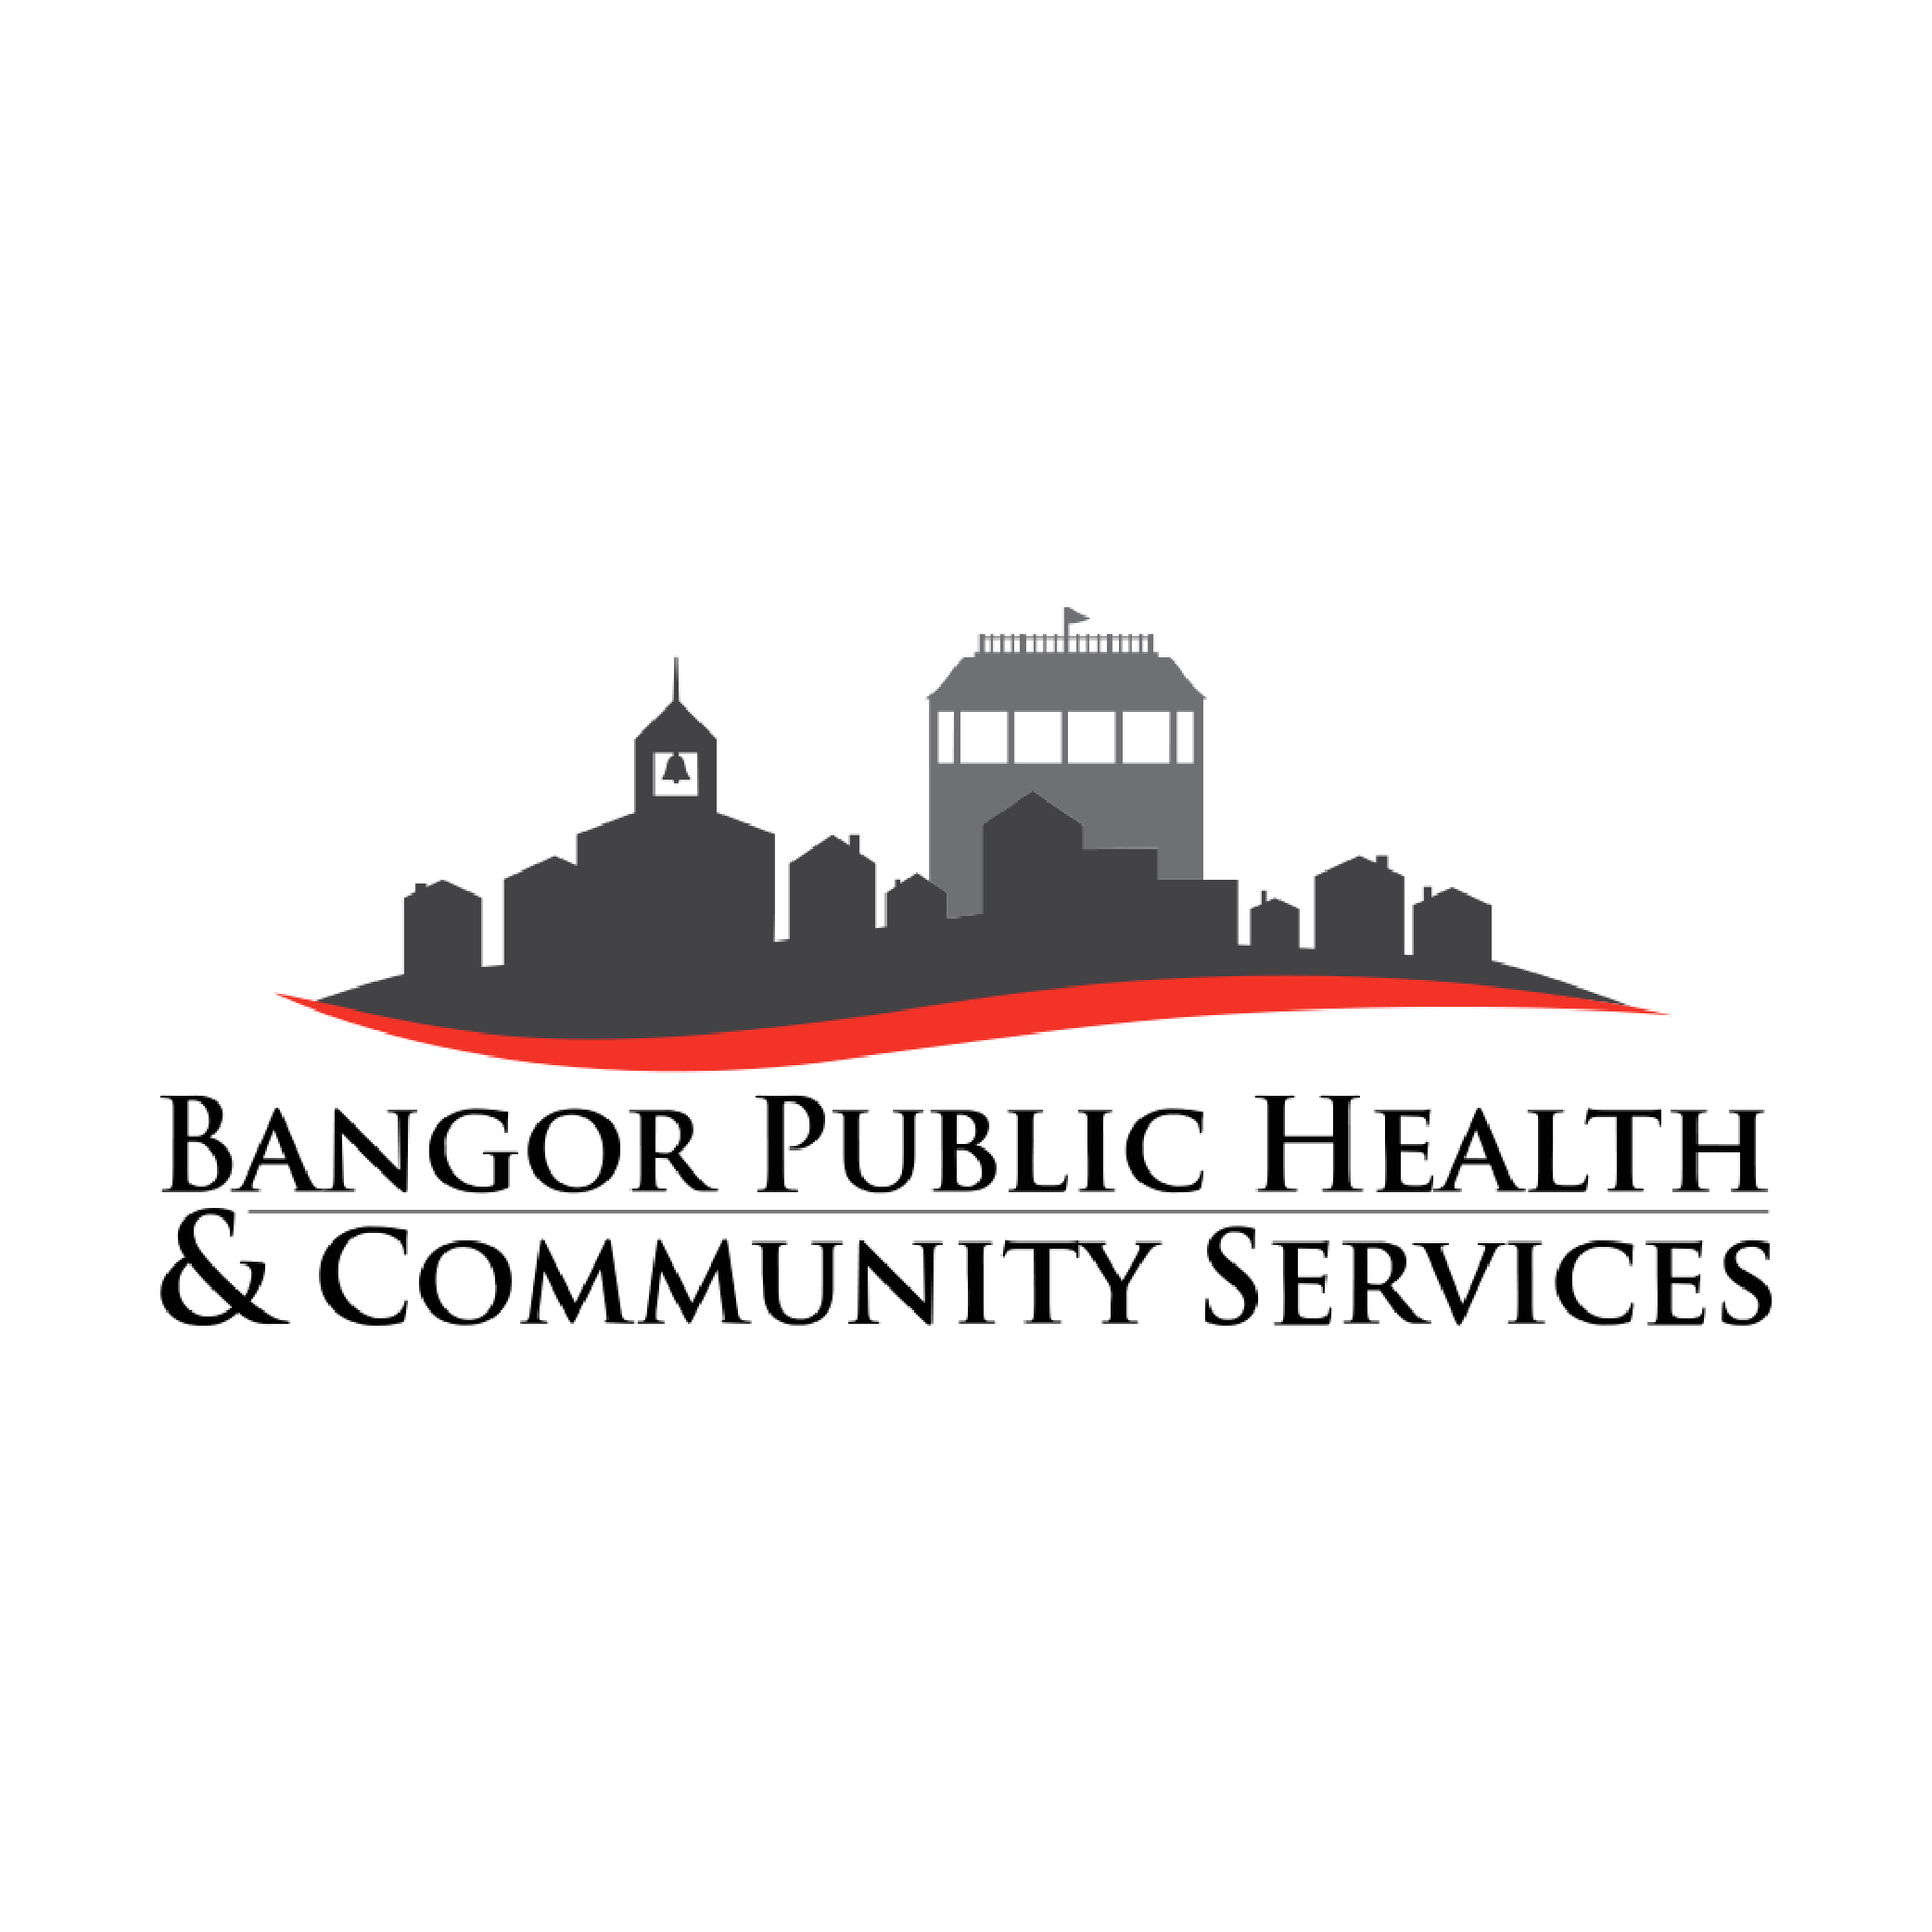 Bangor Public Health & Community Services logo